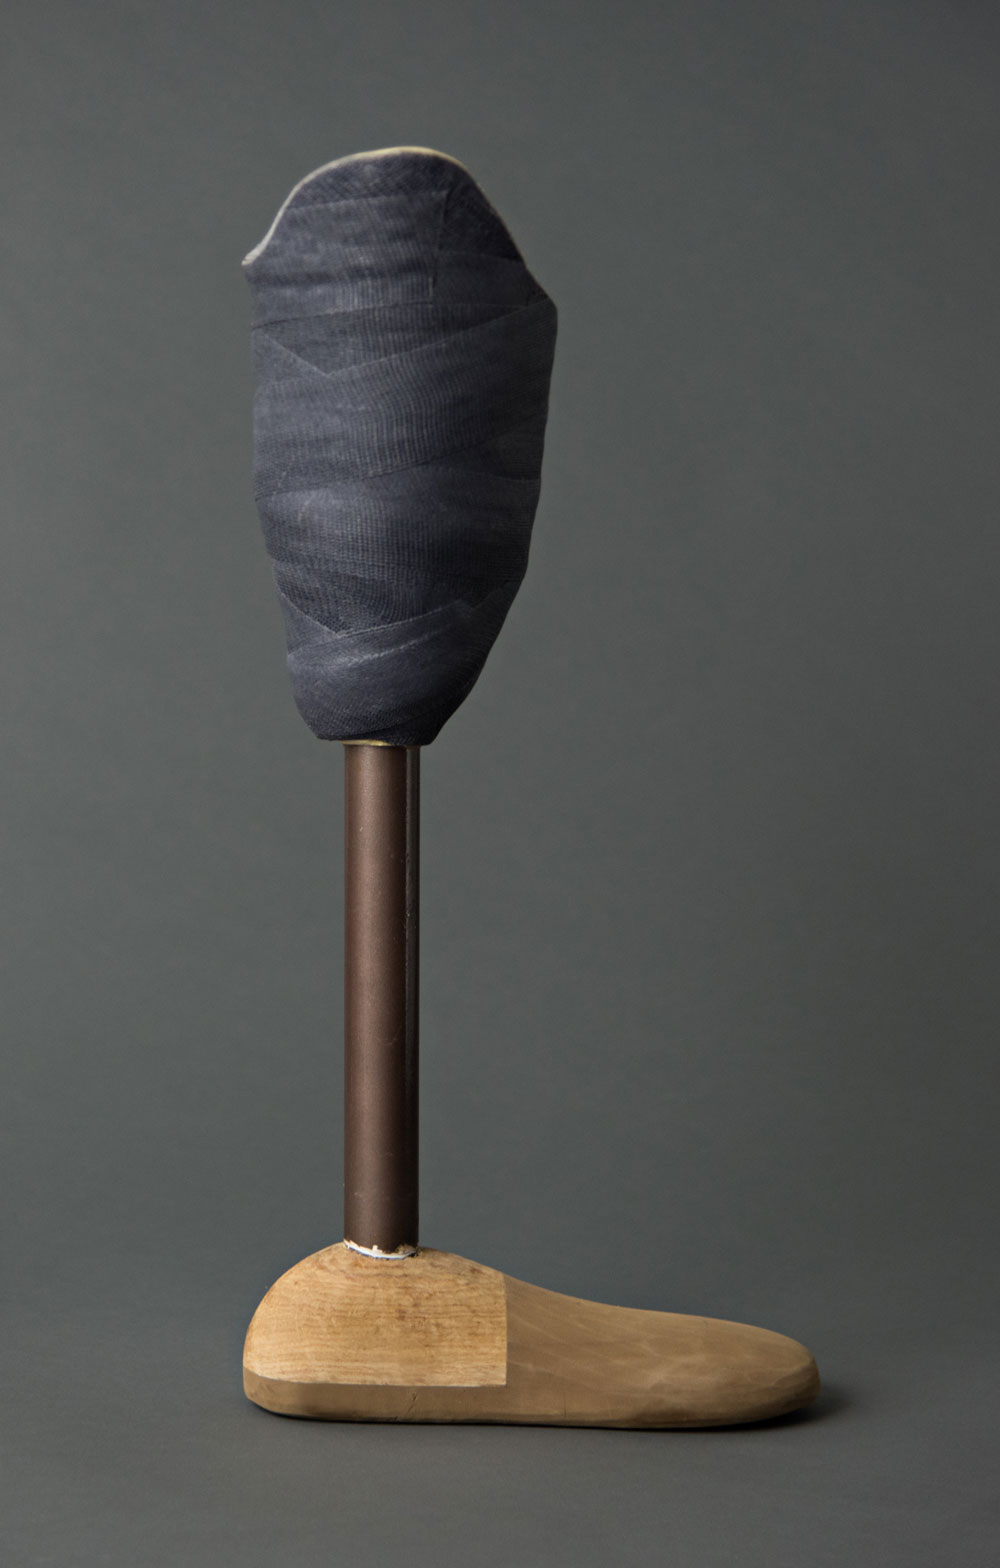 image of an prosthetic leg